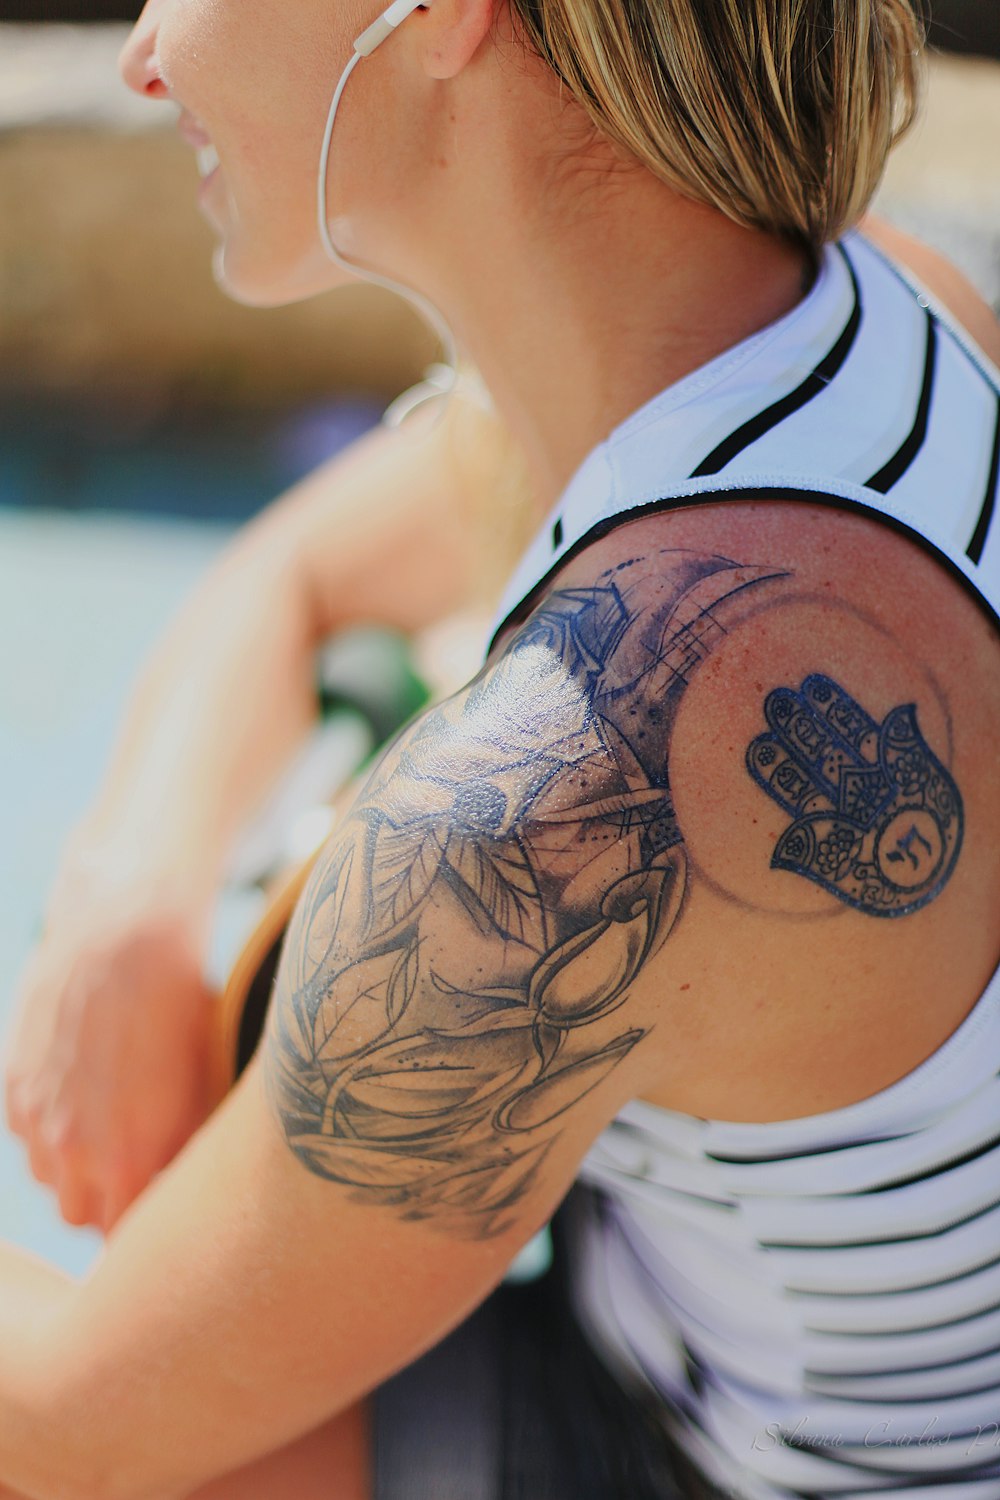 woman wearing white and black stripe tank top showing Hamsa hand tattoo